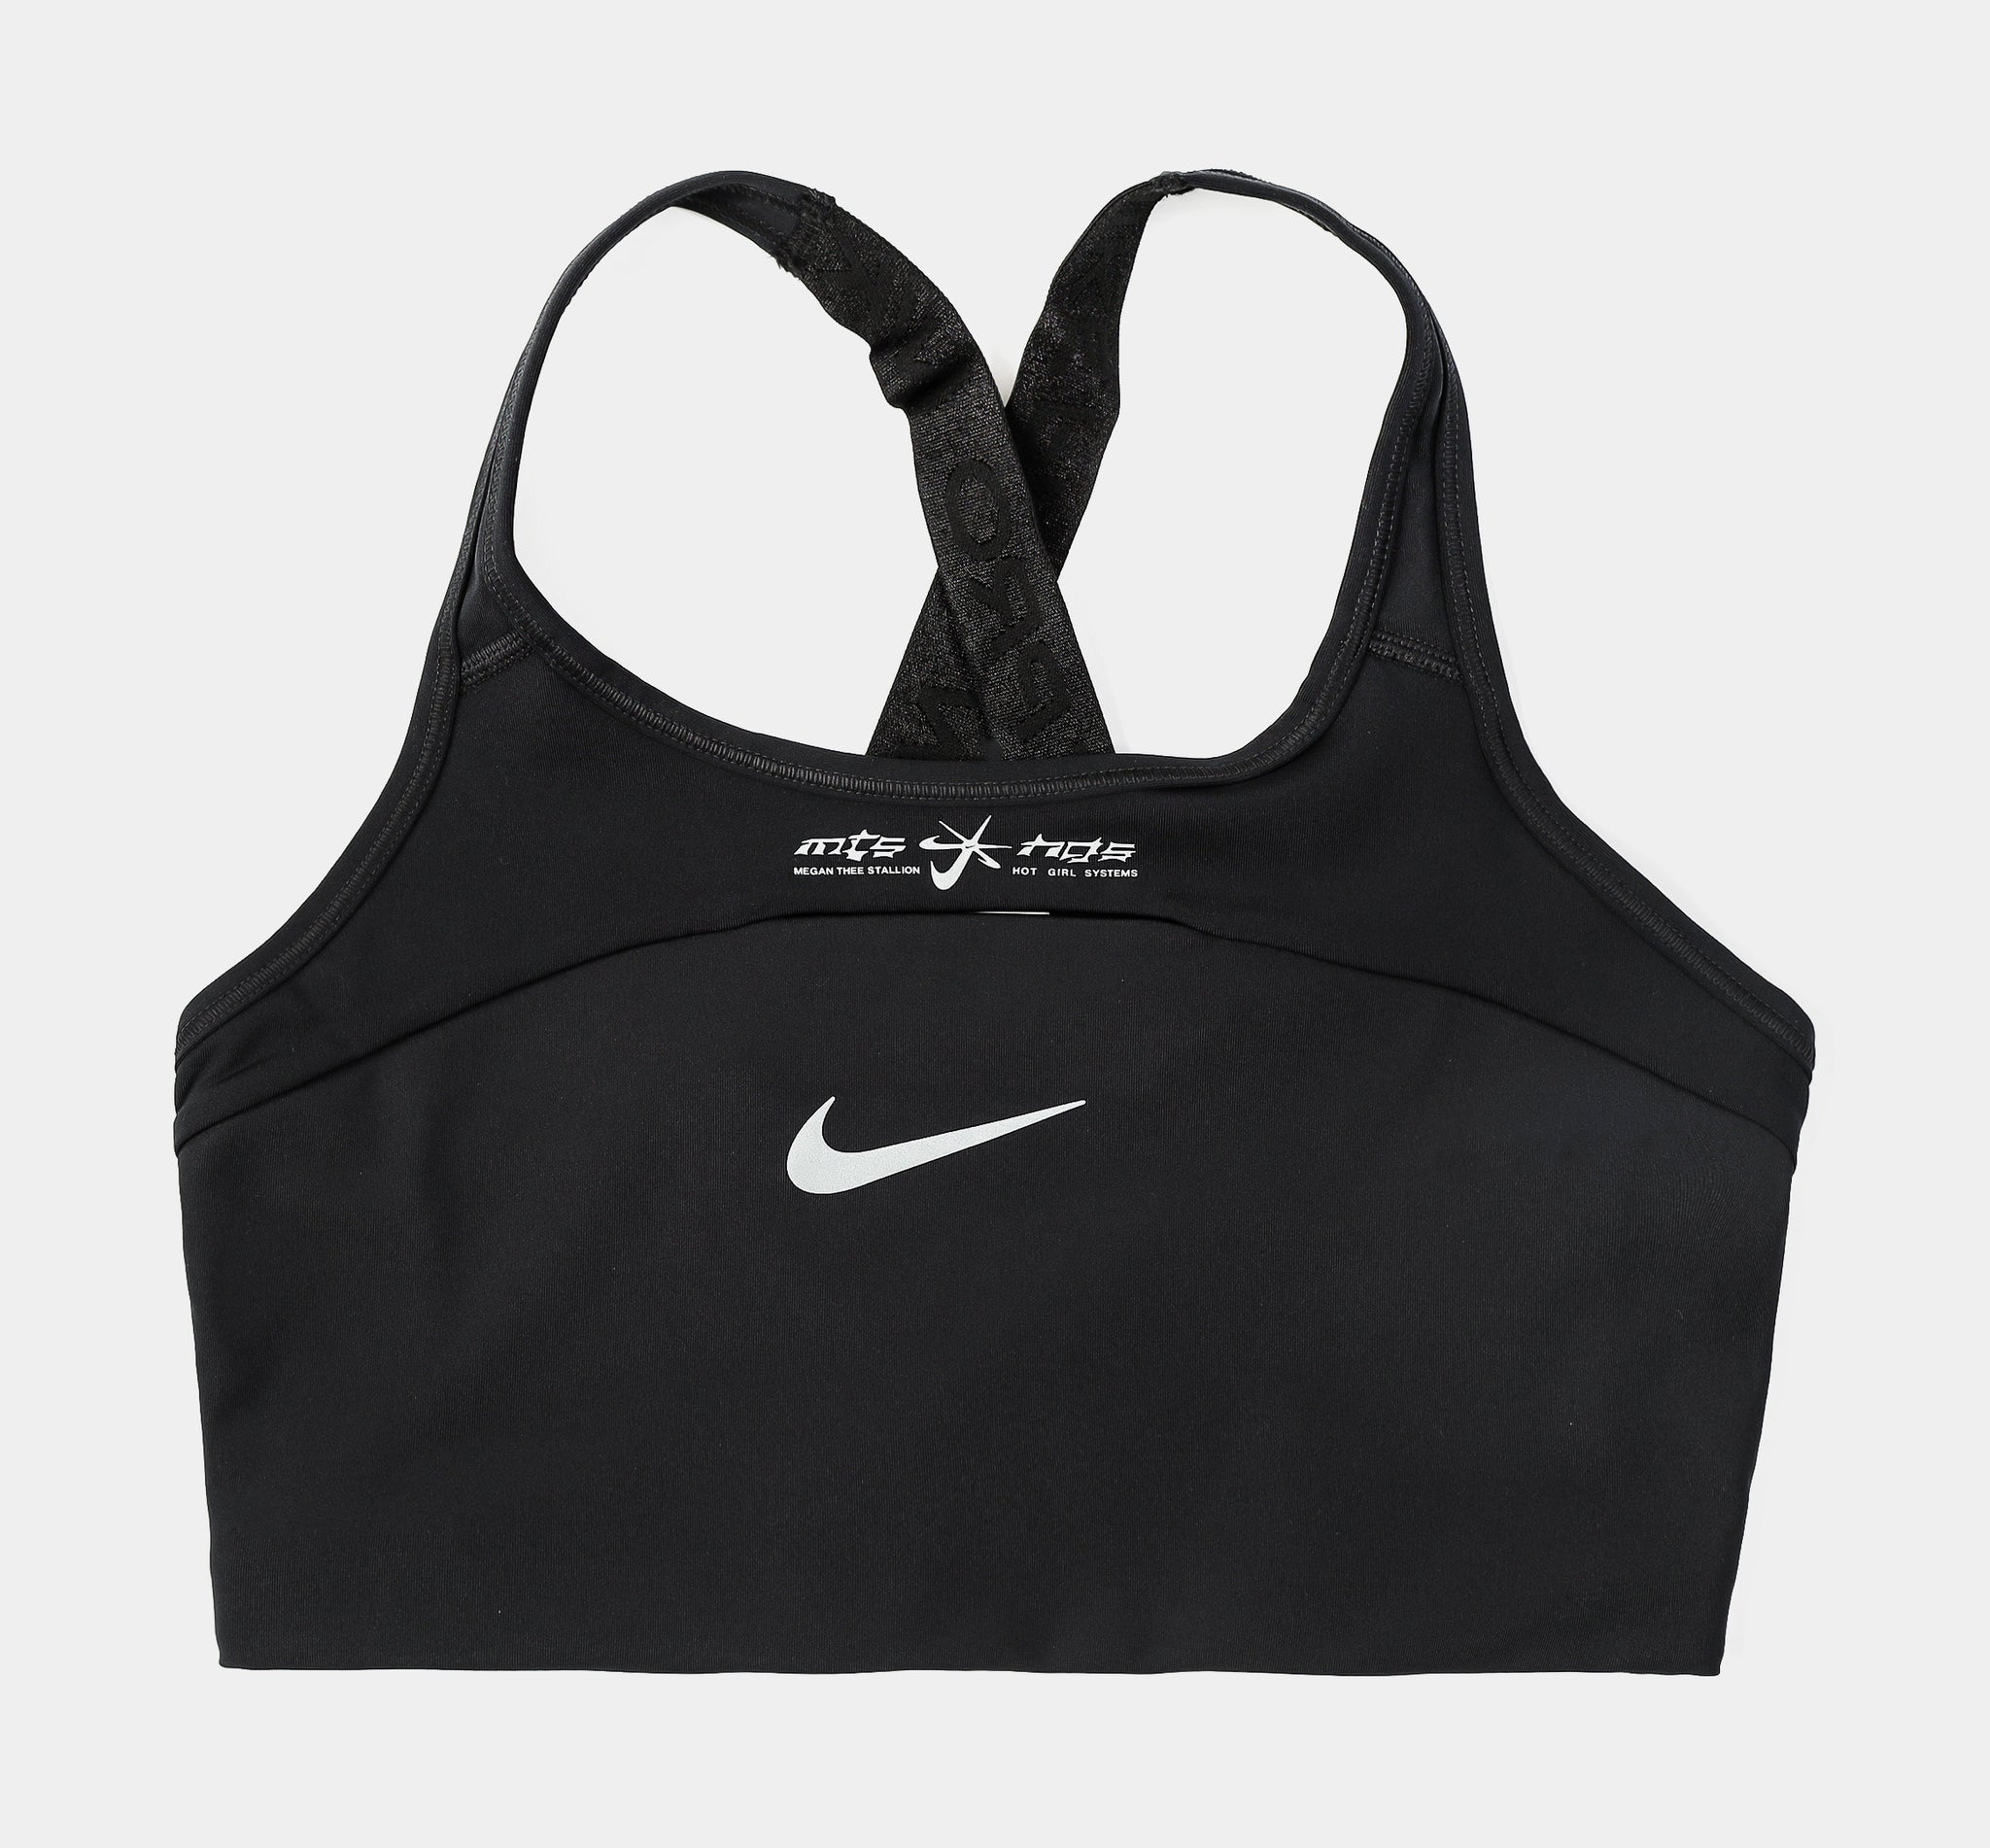 Nike Womens Ribbed Sports Bra, Black / White